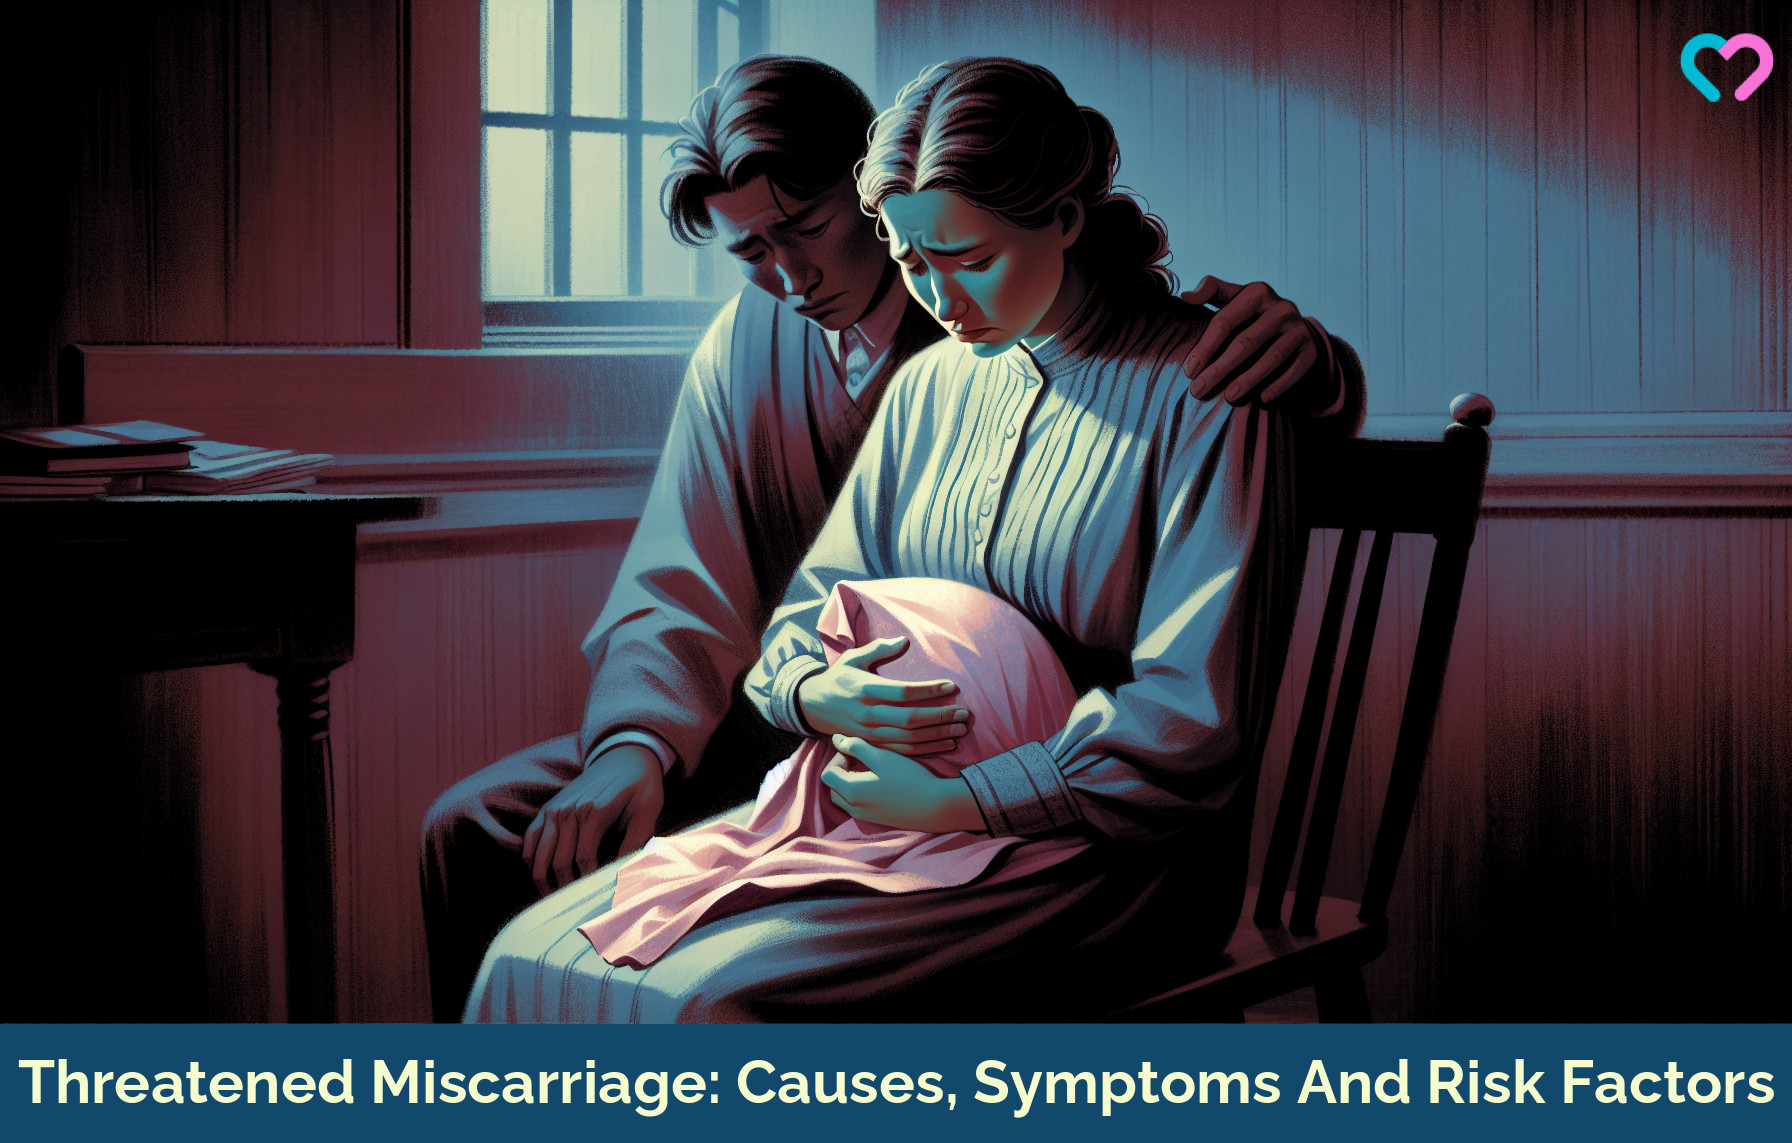 Threatened Miscarriage_illustration